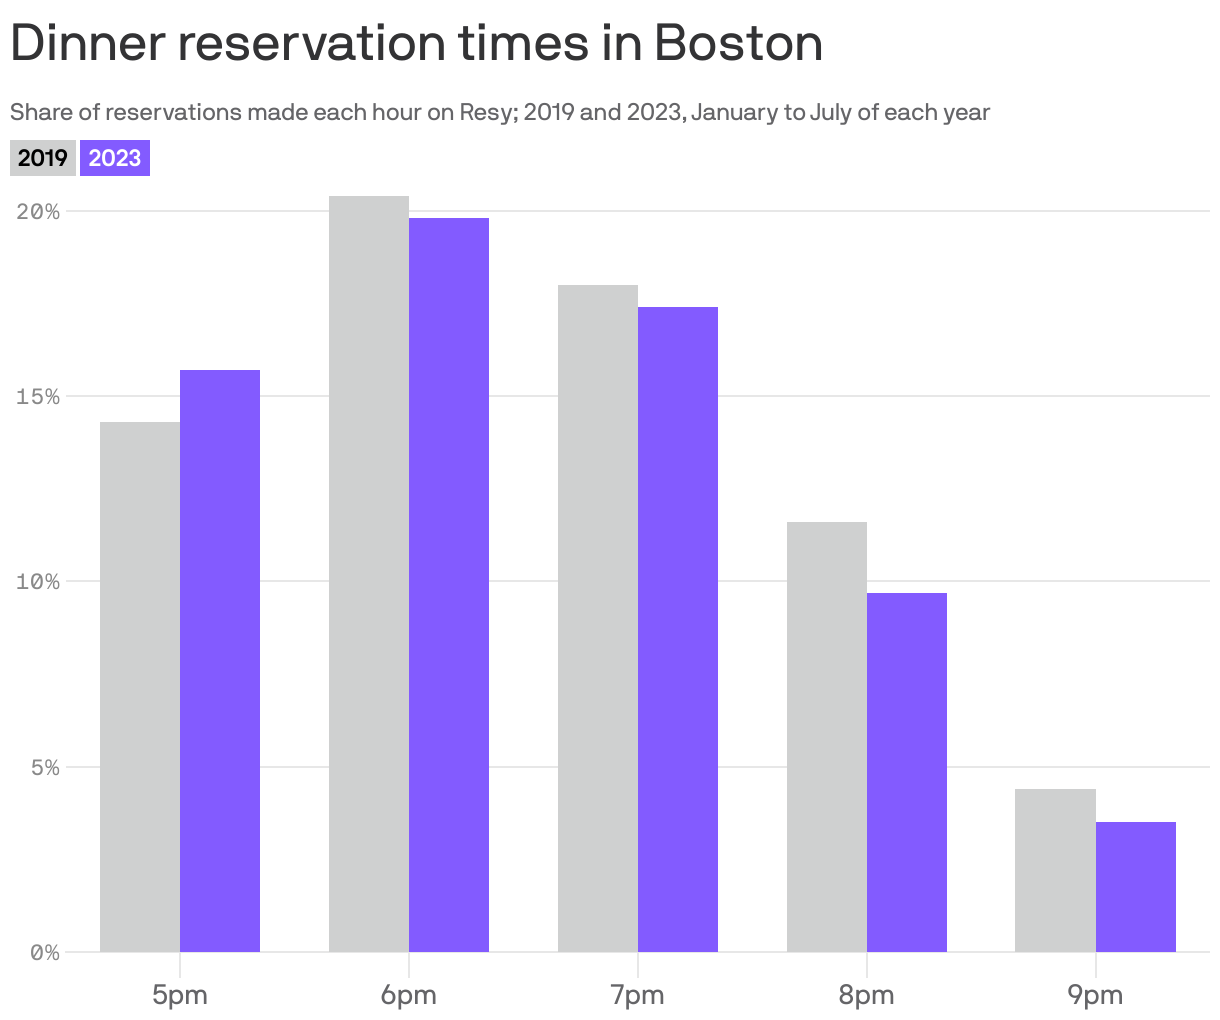 Dinner reservation times in Boston